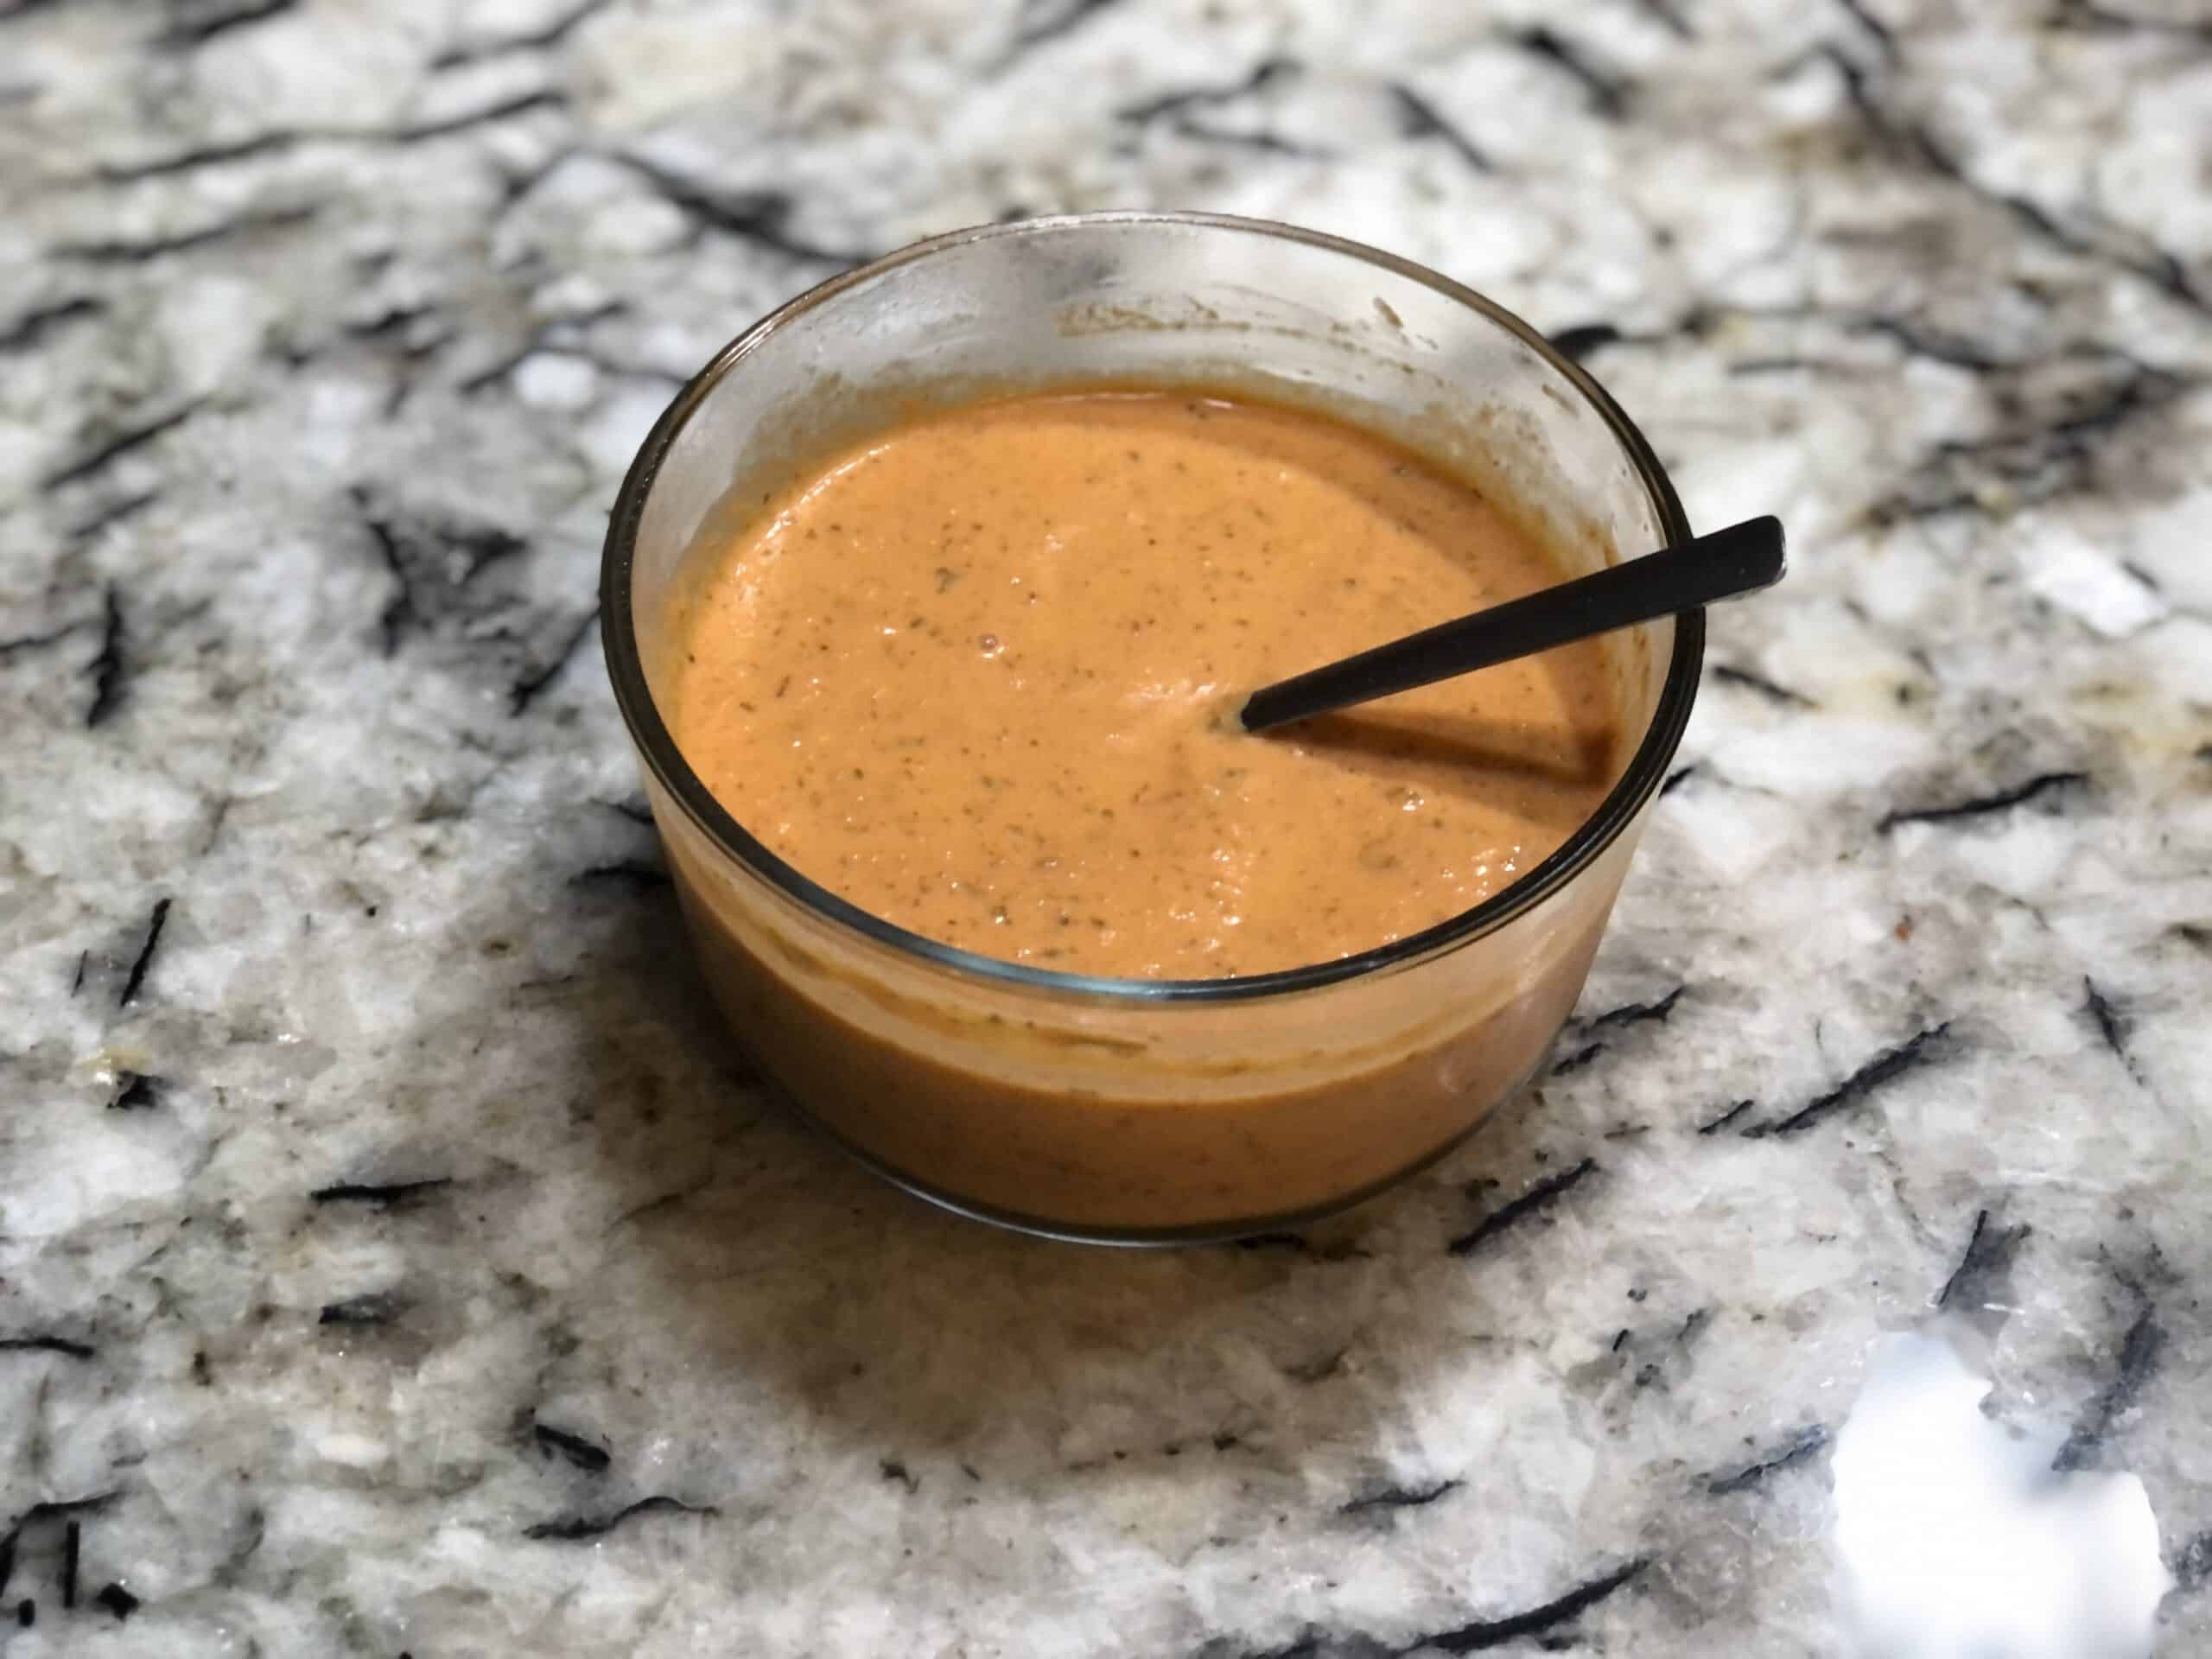 spicy creamy tomato soup in a glass bowl on a granite counter